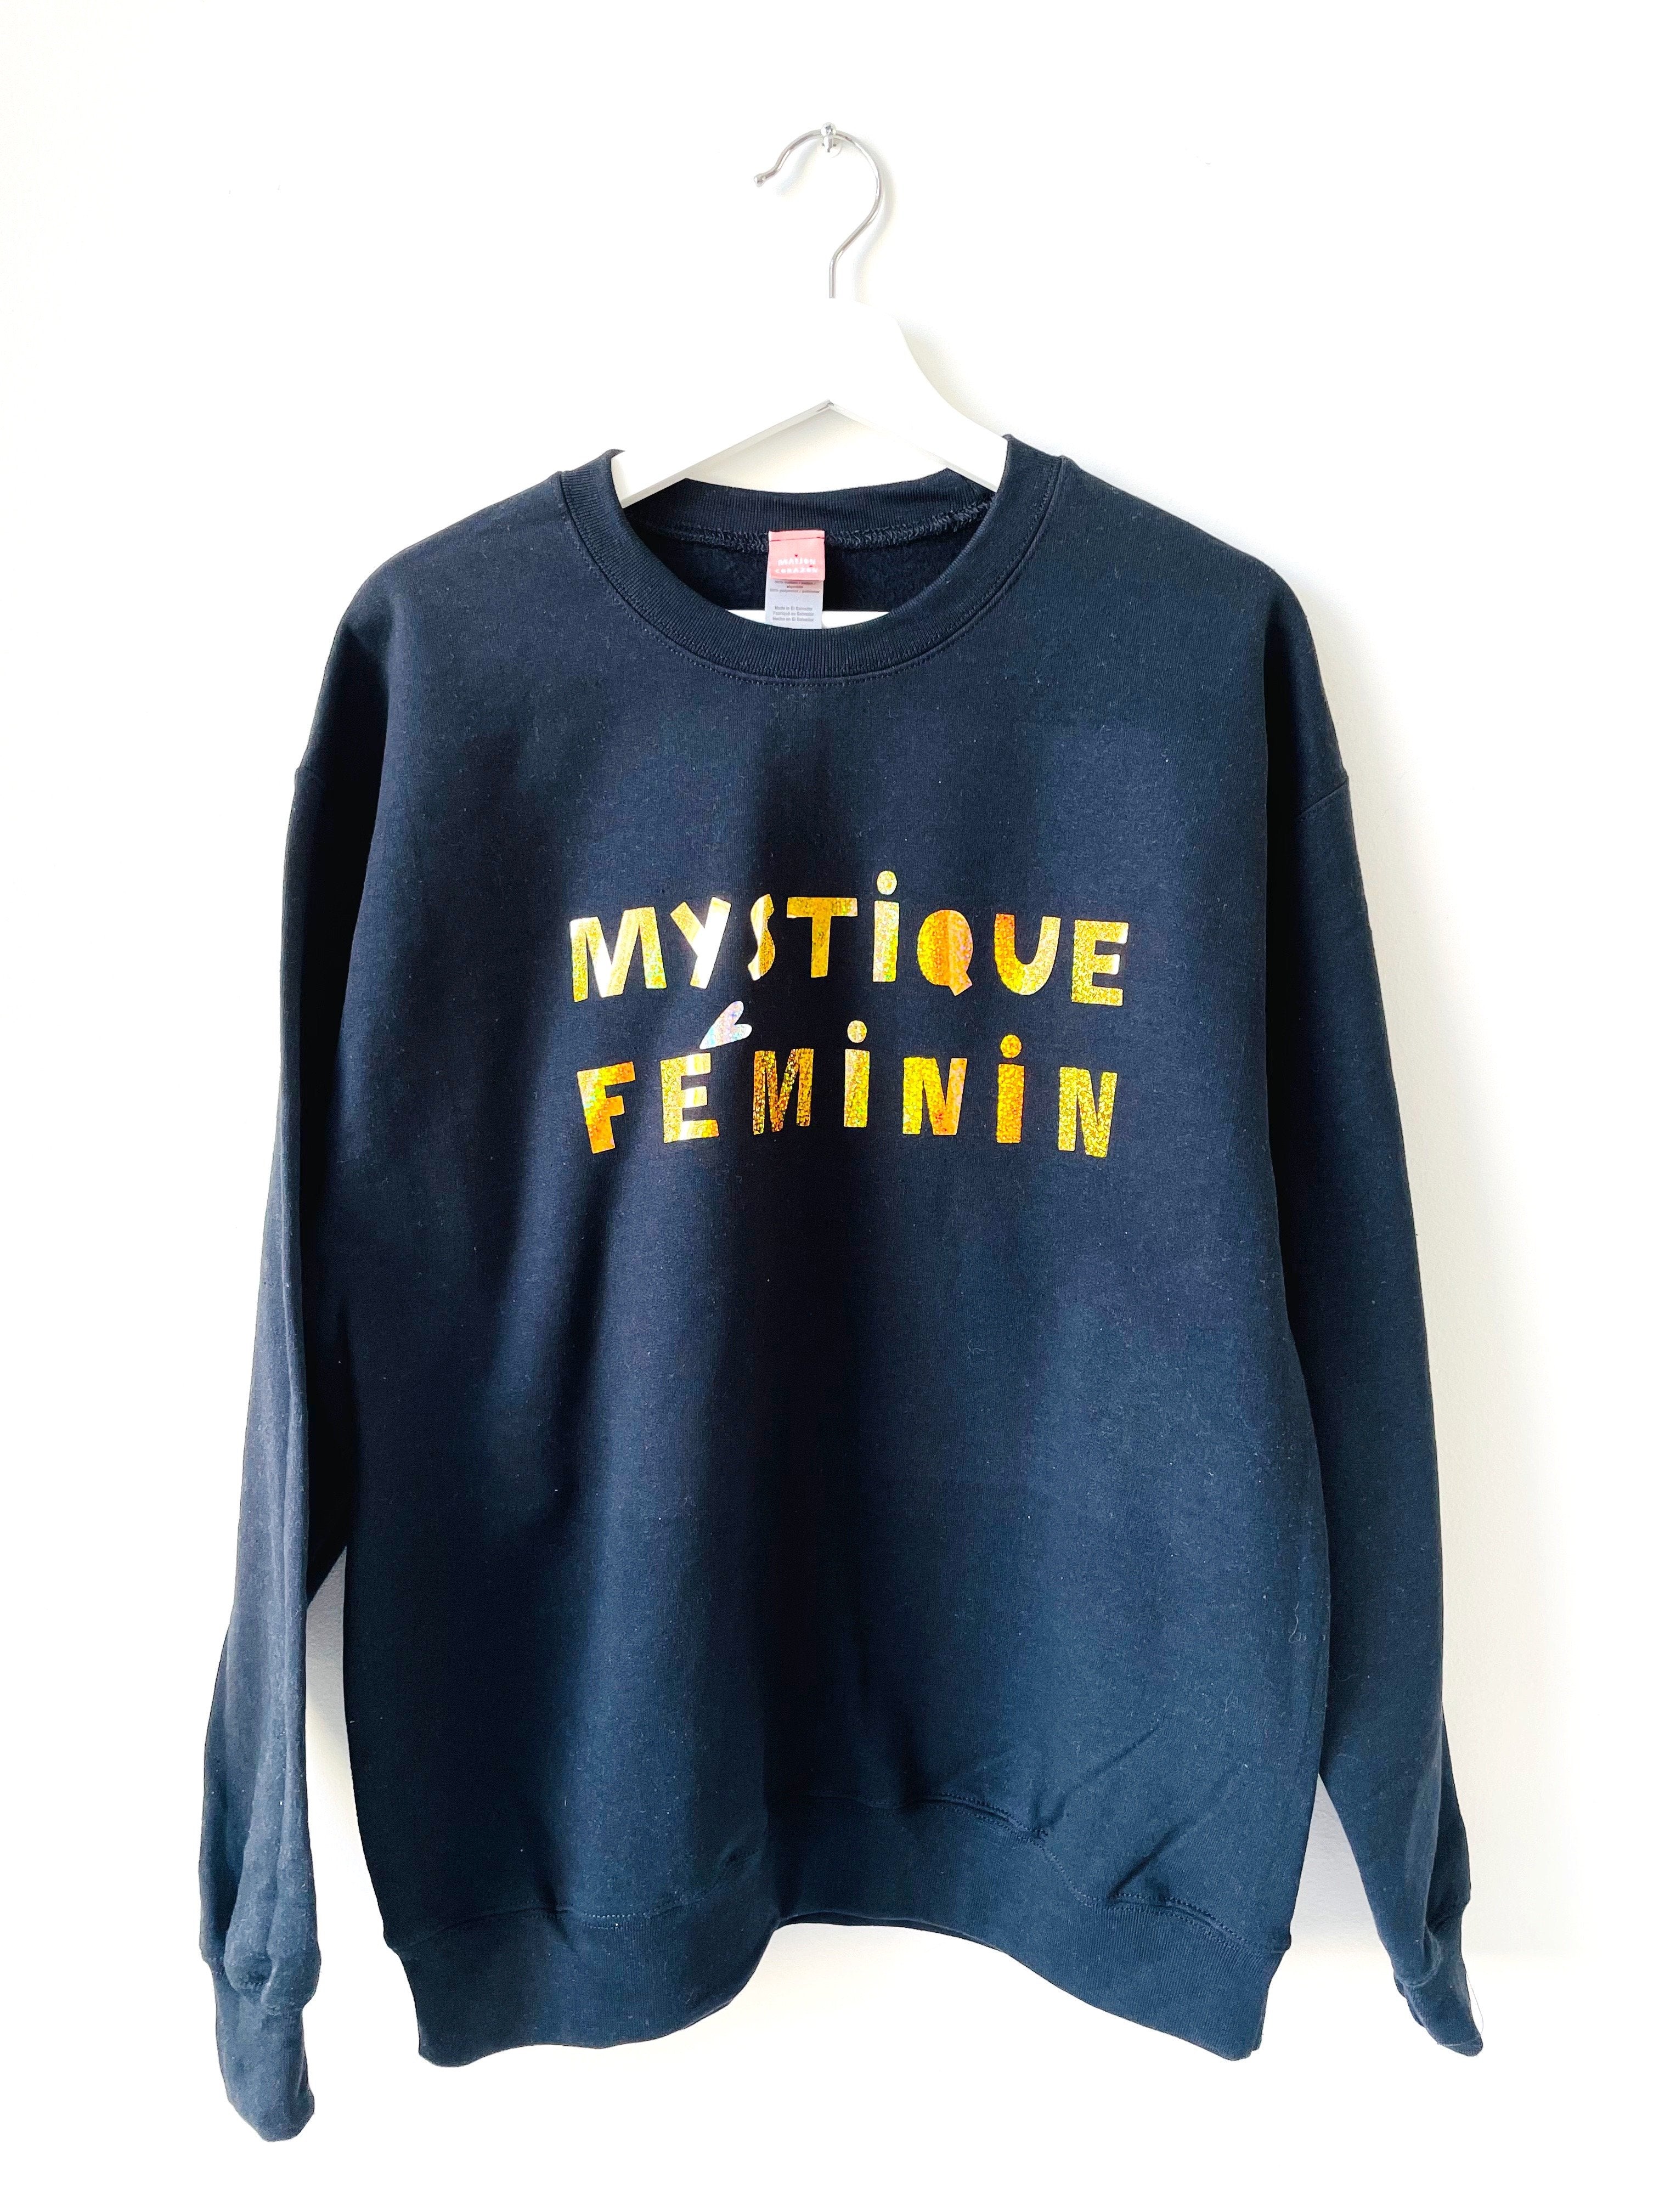 Maison Corazon- Mystique Feminin Sweatshirt- Black Gold